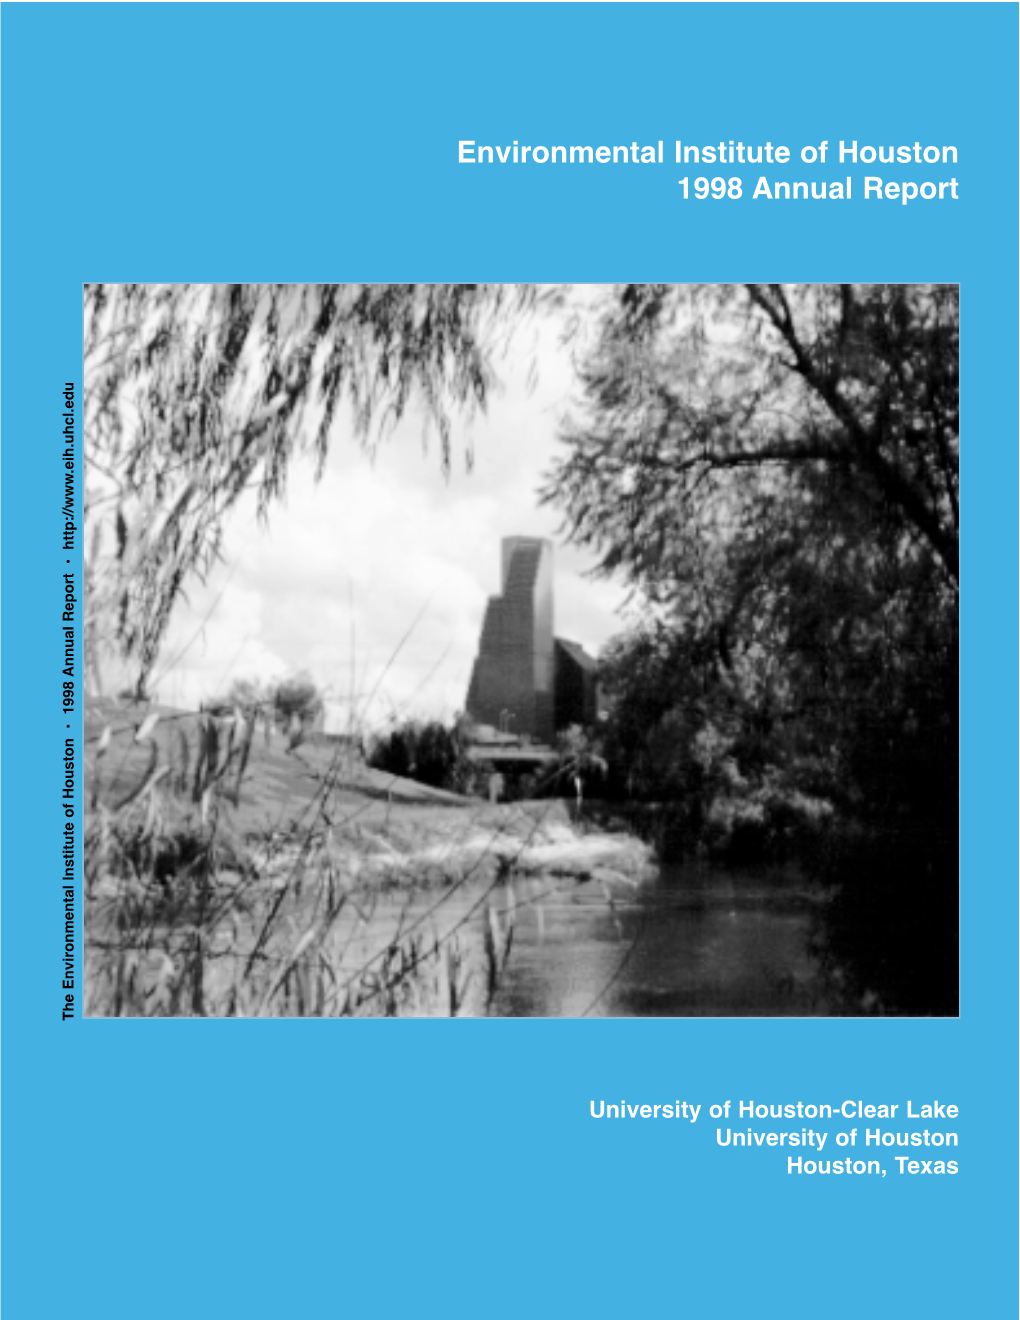 1998 Annual Report / Environmental Institute of Houston